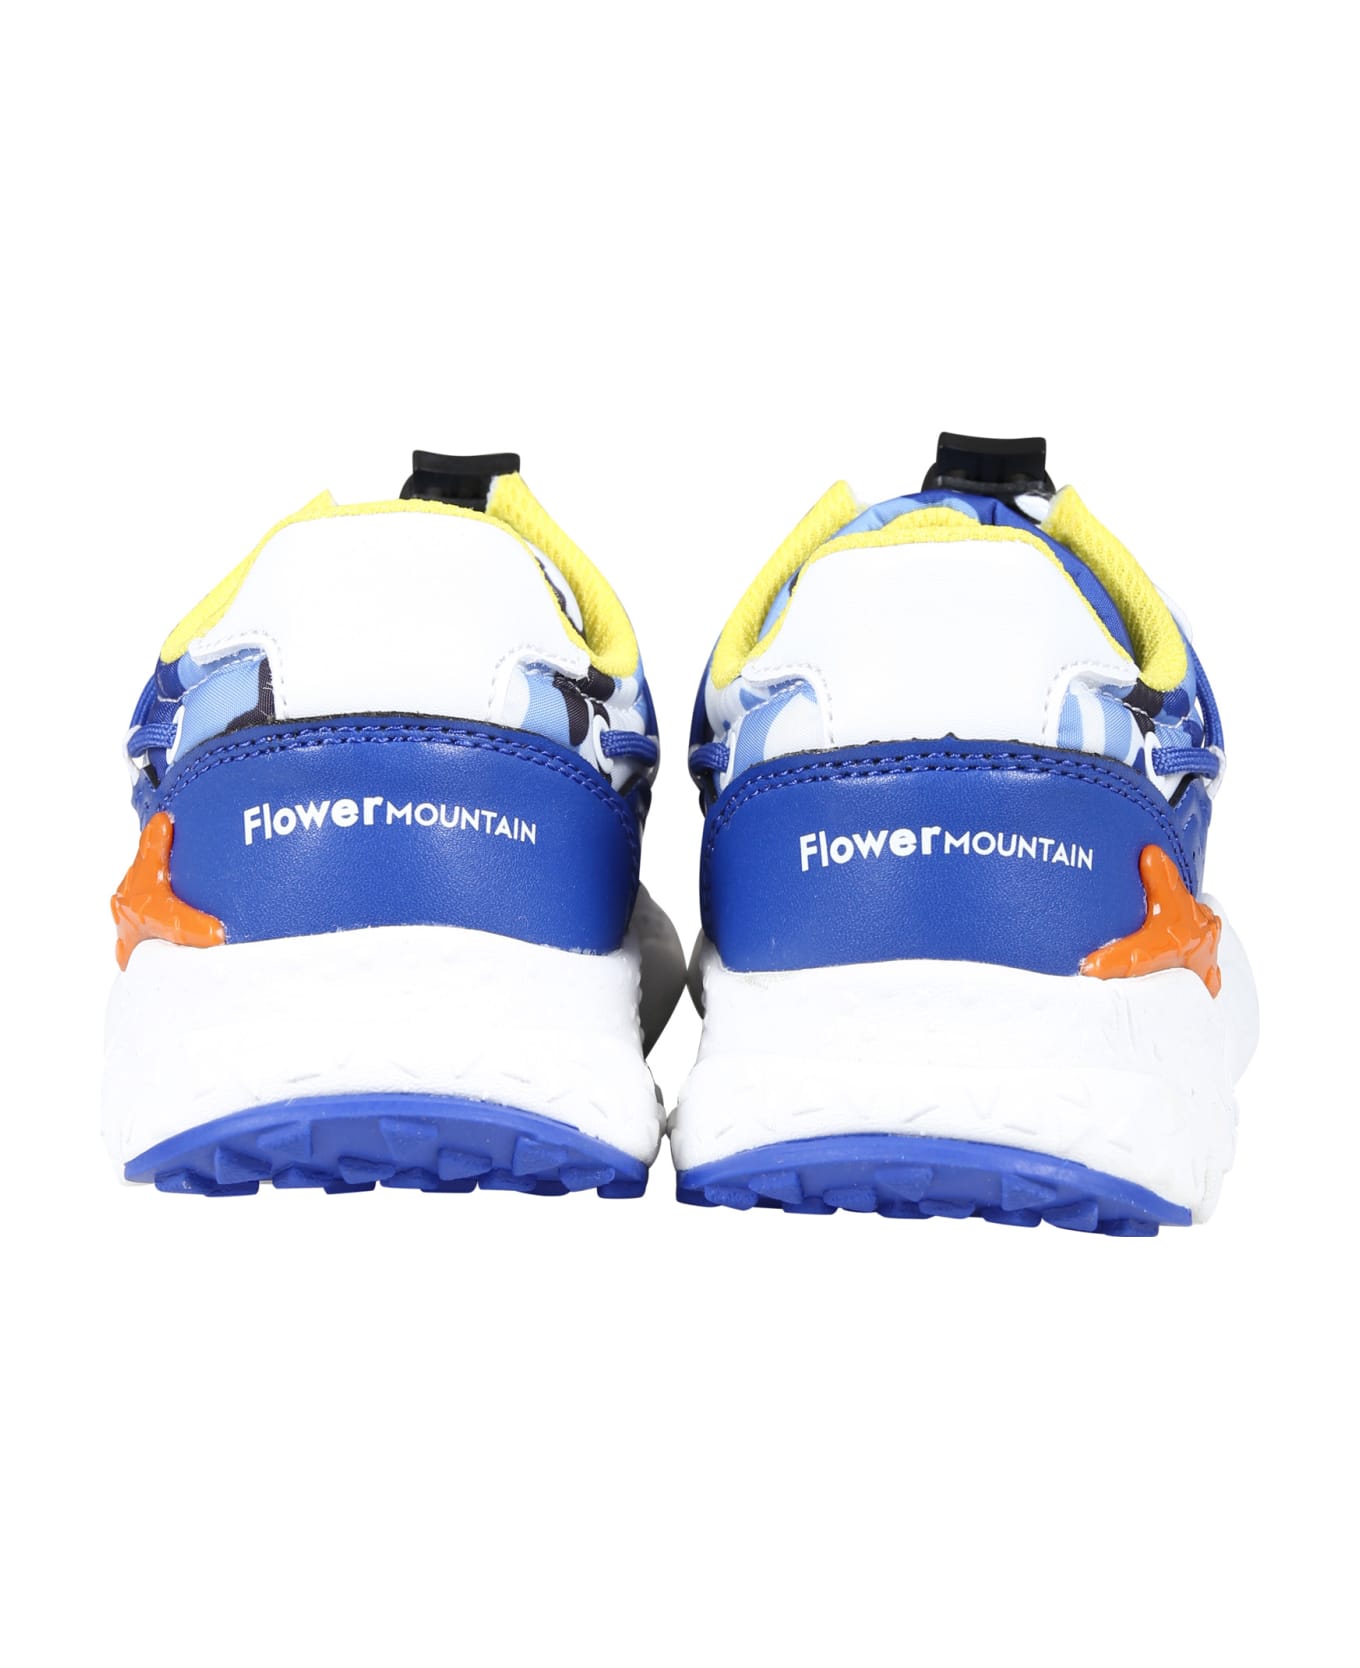 Flower Mountain Blue Raikiri Sneakers For Boy - Blue